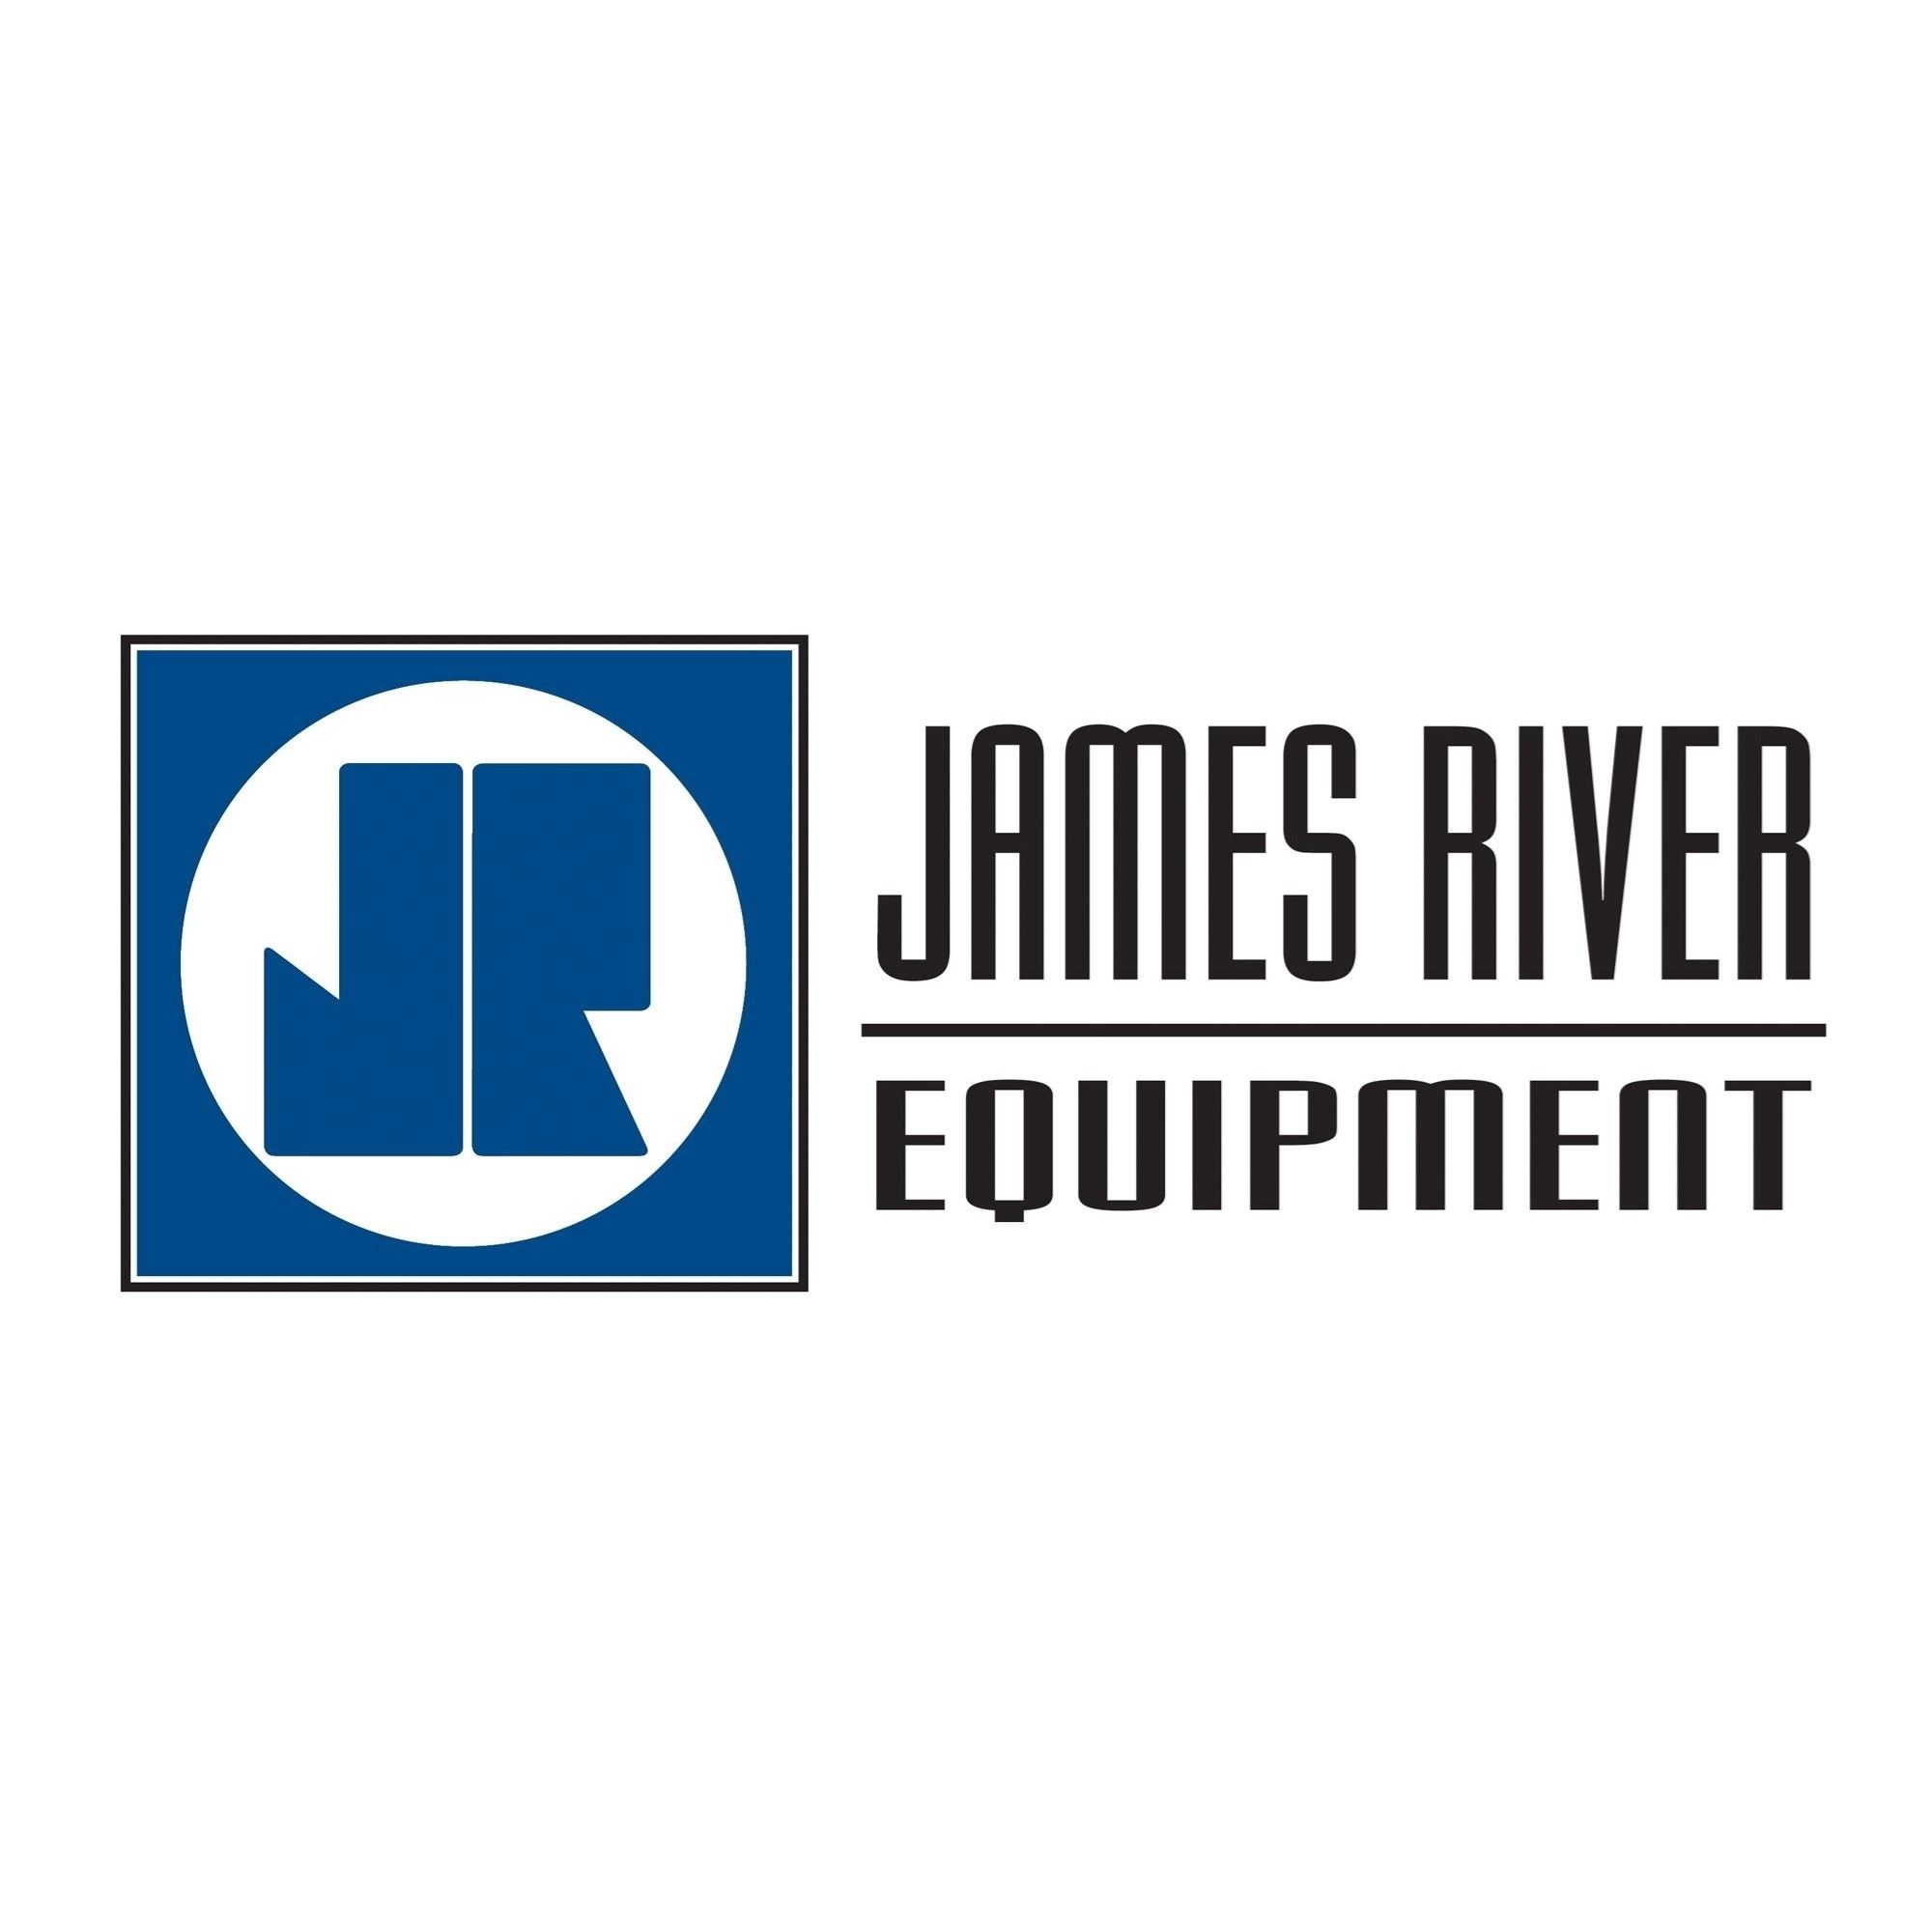 James River Equipment